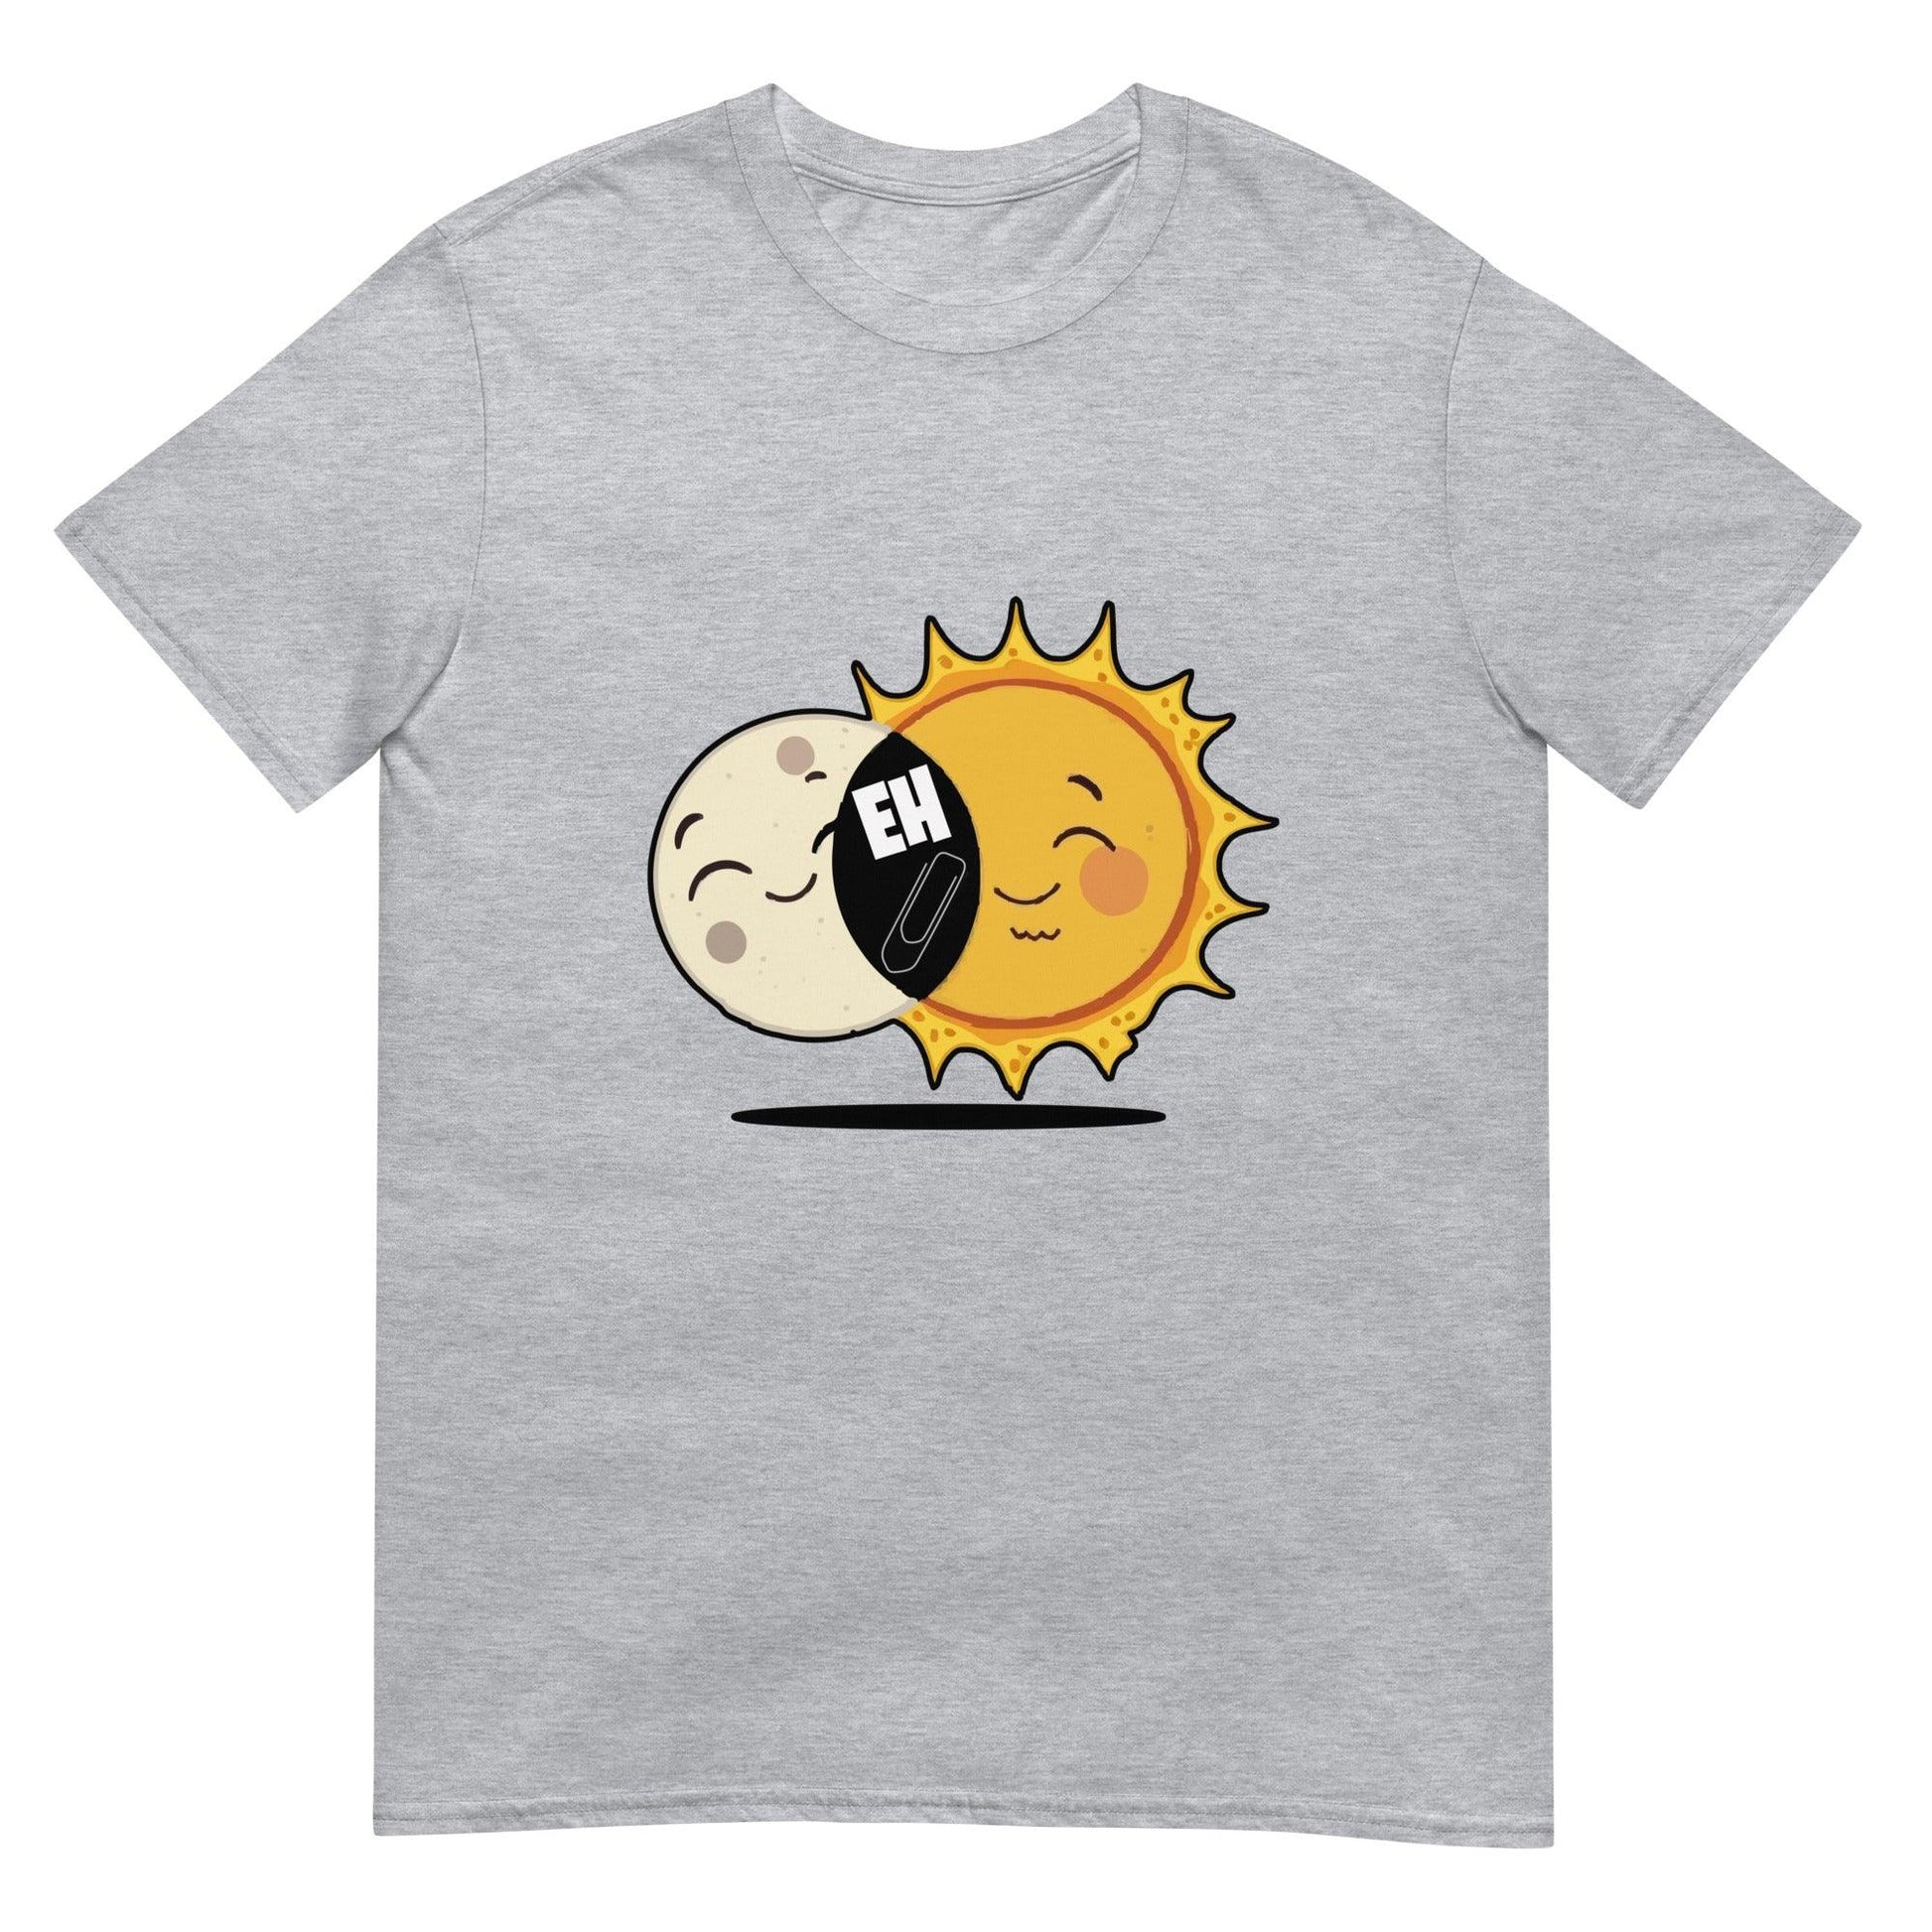 Eh Clips!!! T-Shirt - Astro TShirts